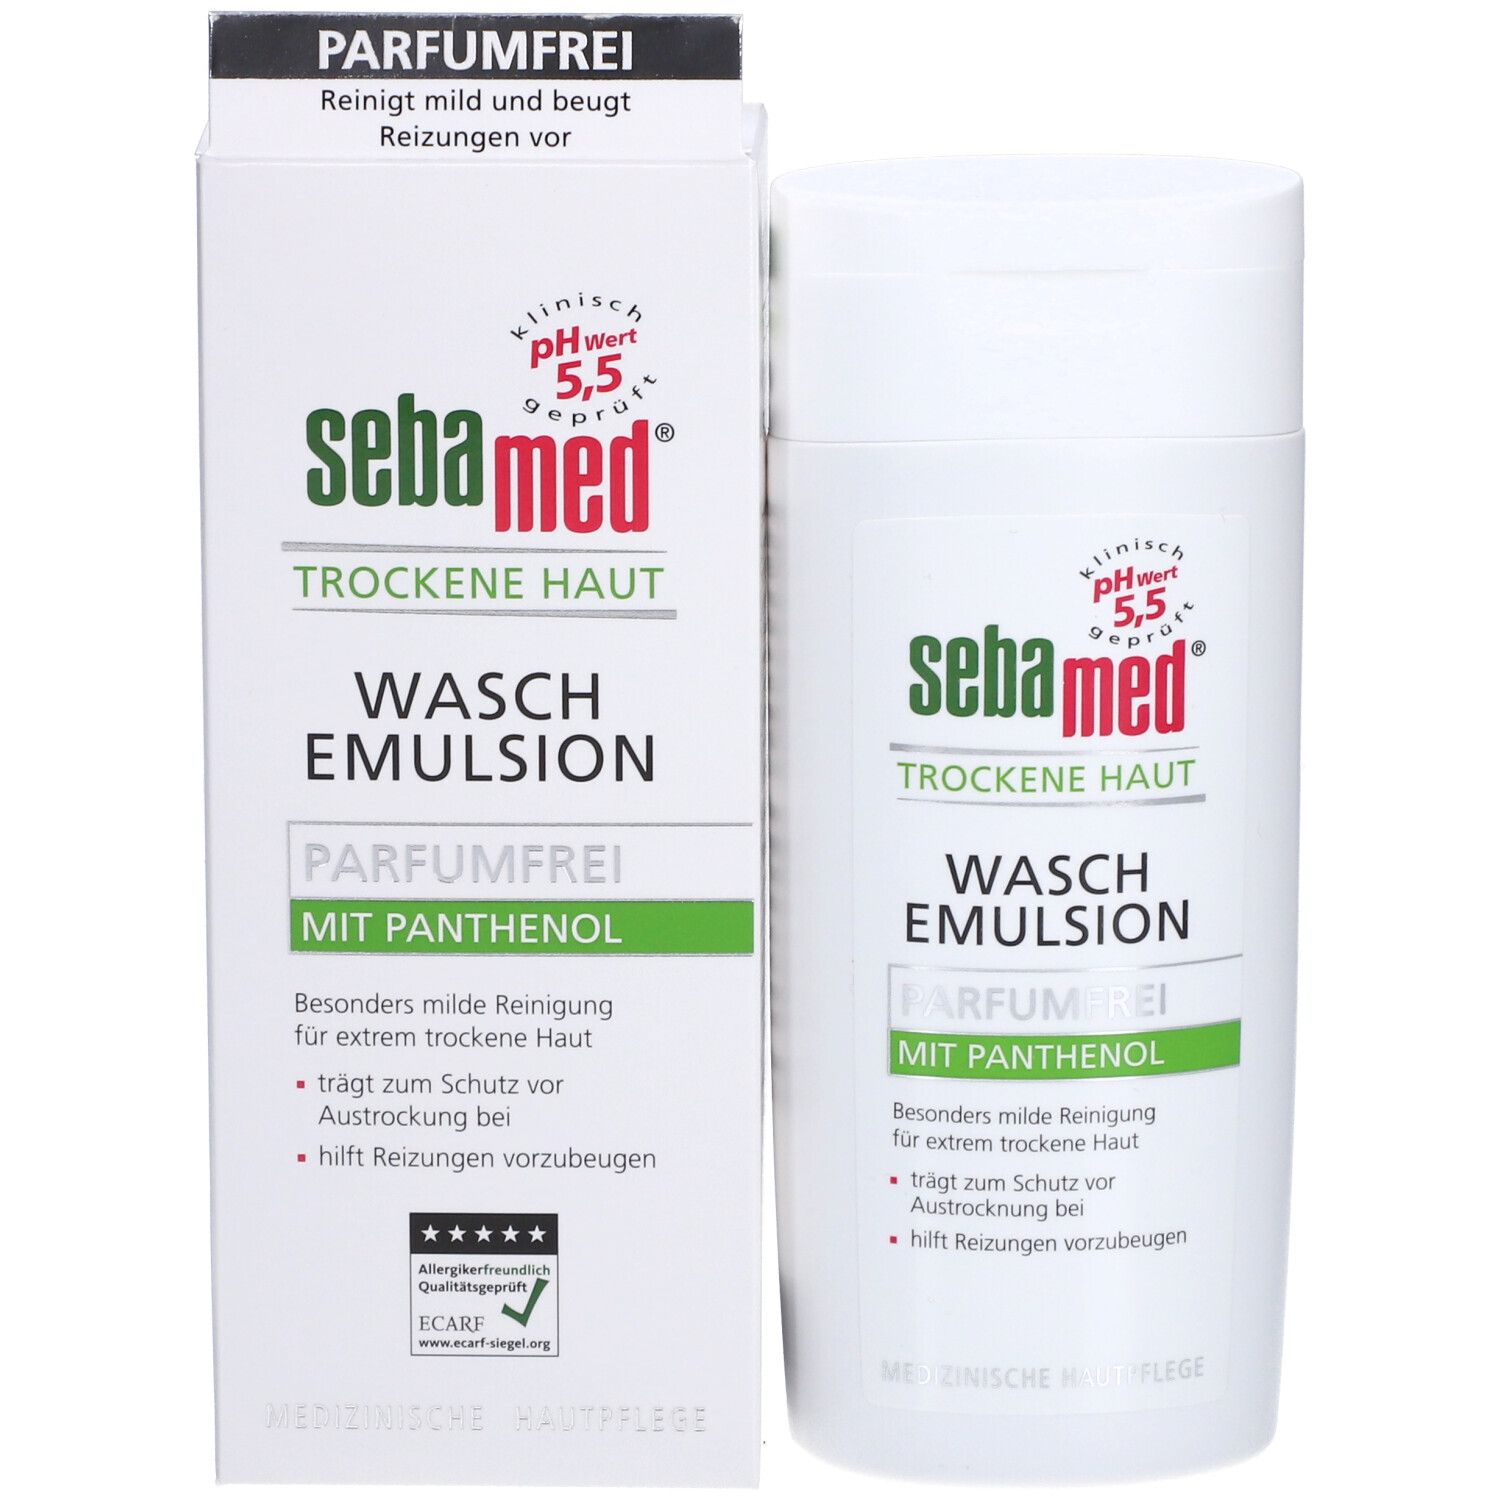 sebamed® Trockene Haut Waschemulsion Parfumfrei